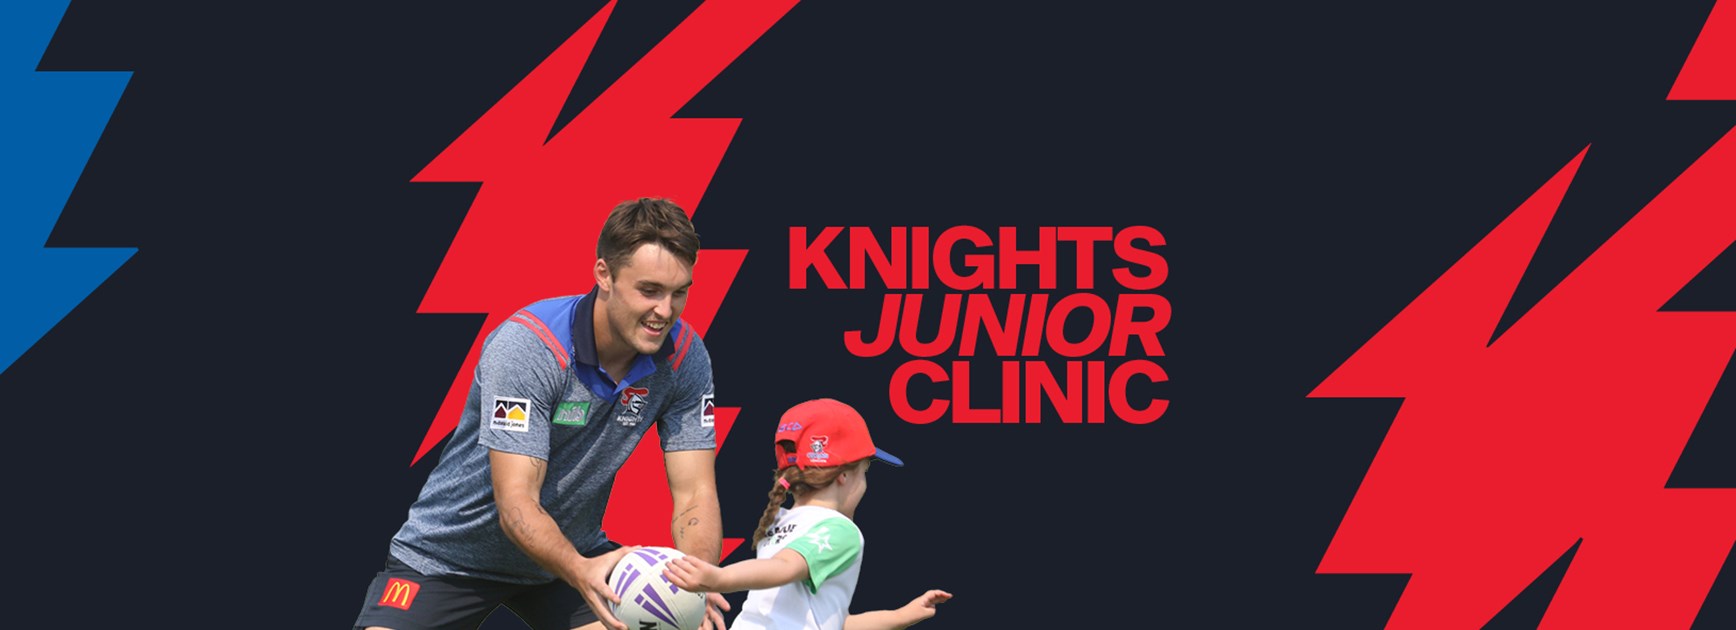 Knights return for Tamworth Junior Clinic